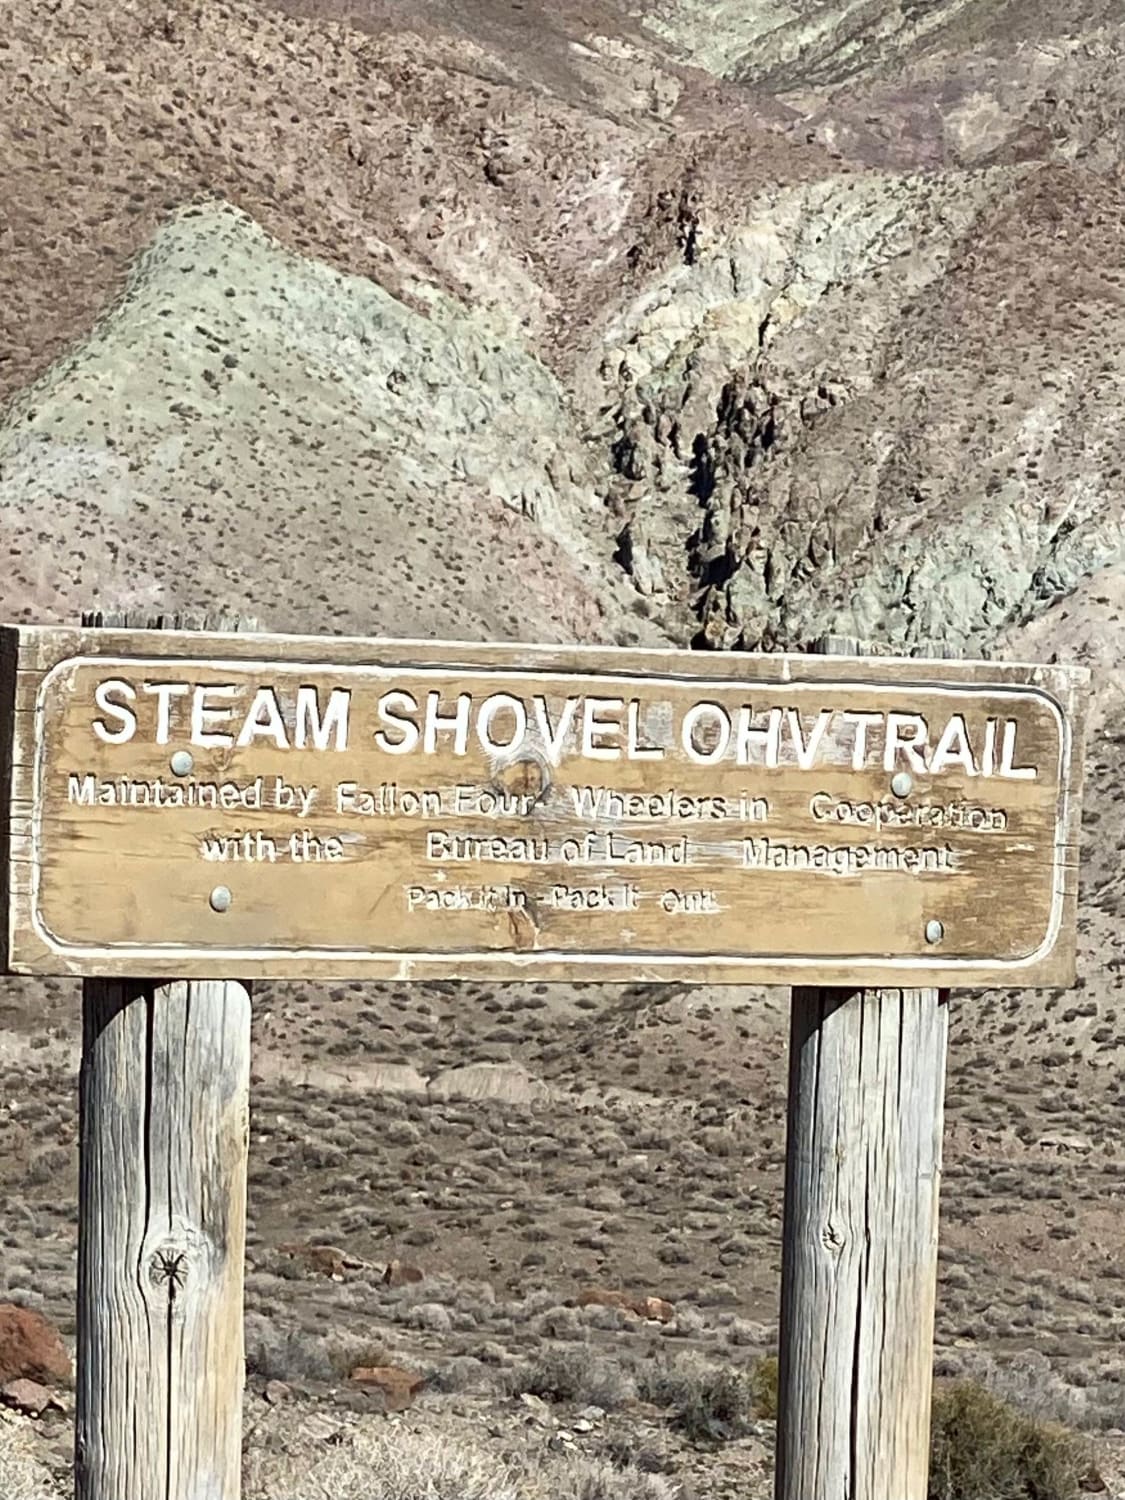 West Steam Shovel OHV Trail